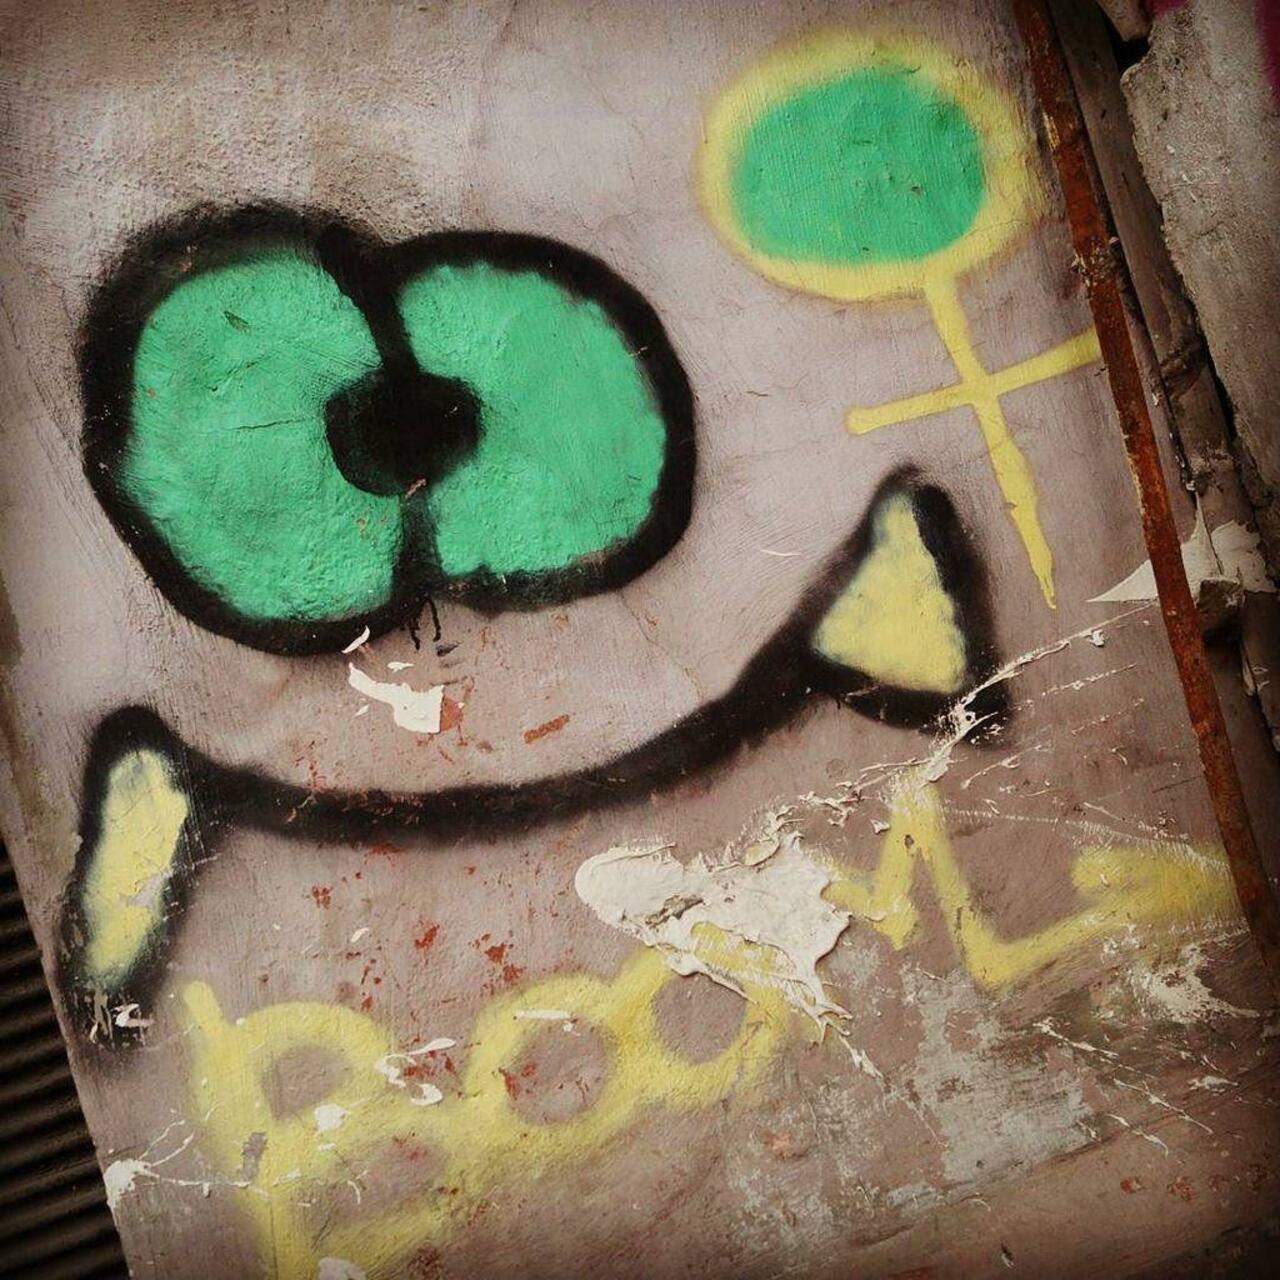 #граффити #графити #graffiti #art #grafitti #streetart #уличныйфотограф  #streetphotography #красноярск http://t.co/8z2Fg2DKTW